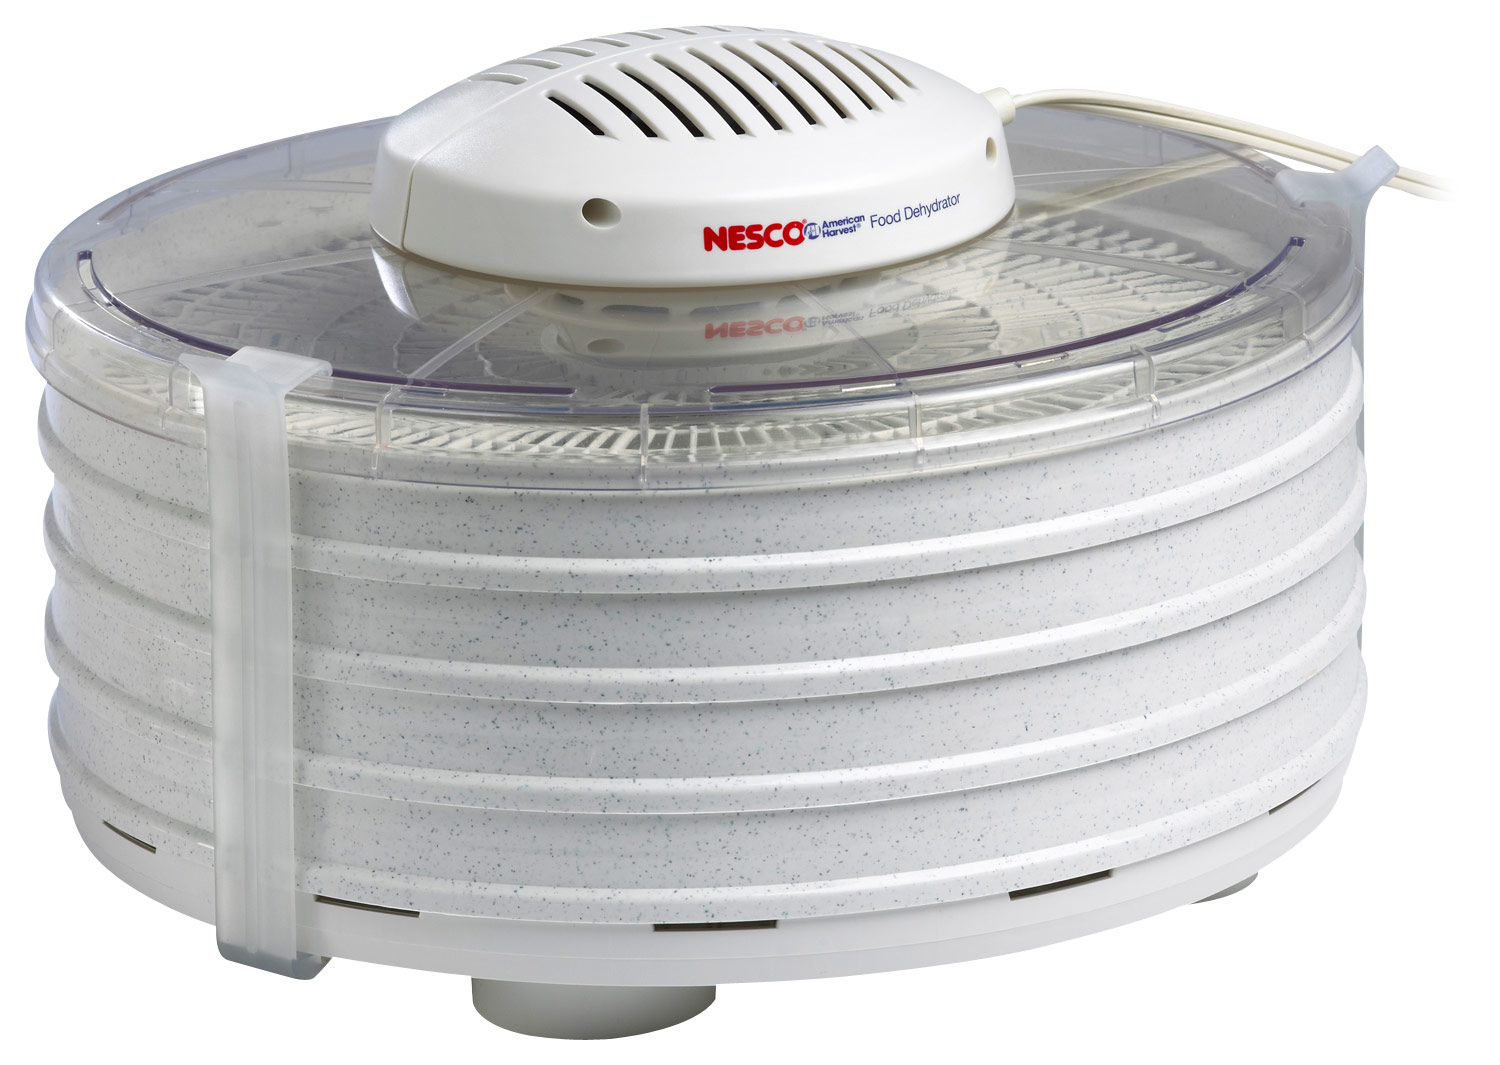 Best Buy: Nesco Snackmaster Pro 600-Watt Food Dehydrator White Fd-75pr